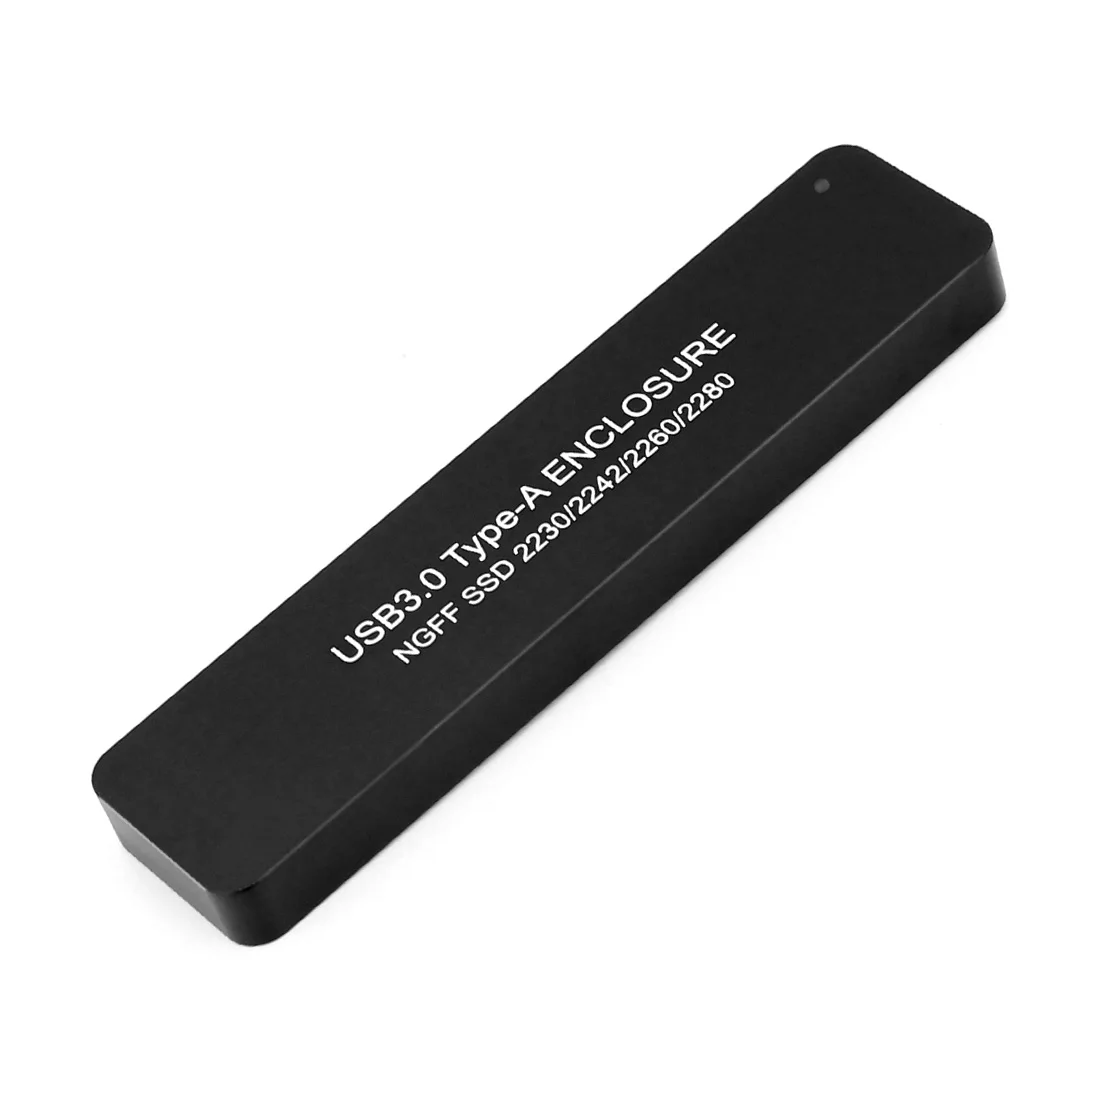 WBTUO LM-881U USB3.0 TYPE-A для NGFF SSD корпус USB enbedded для NGFF SSD SATA SSD жесткий диск адаптер 2230/2242/2260/2280 Q19903/5